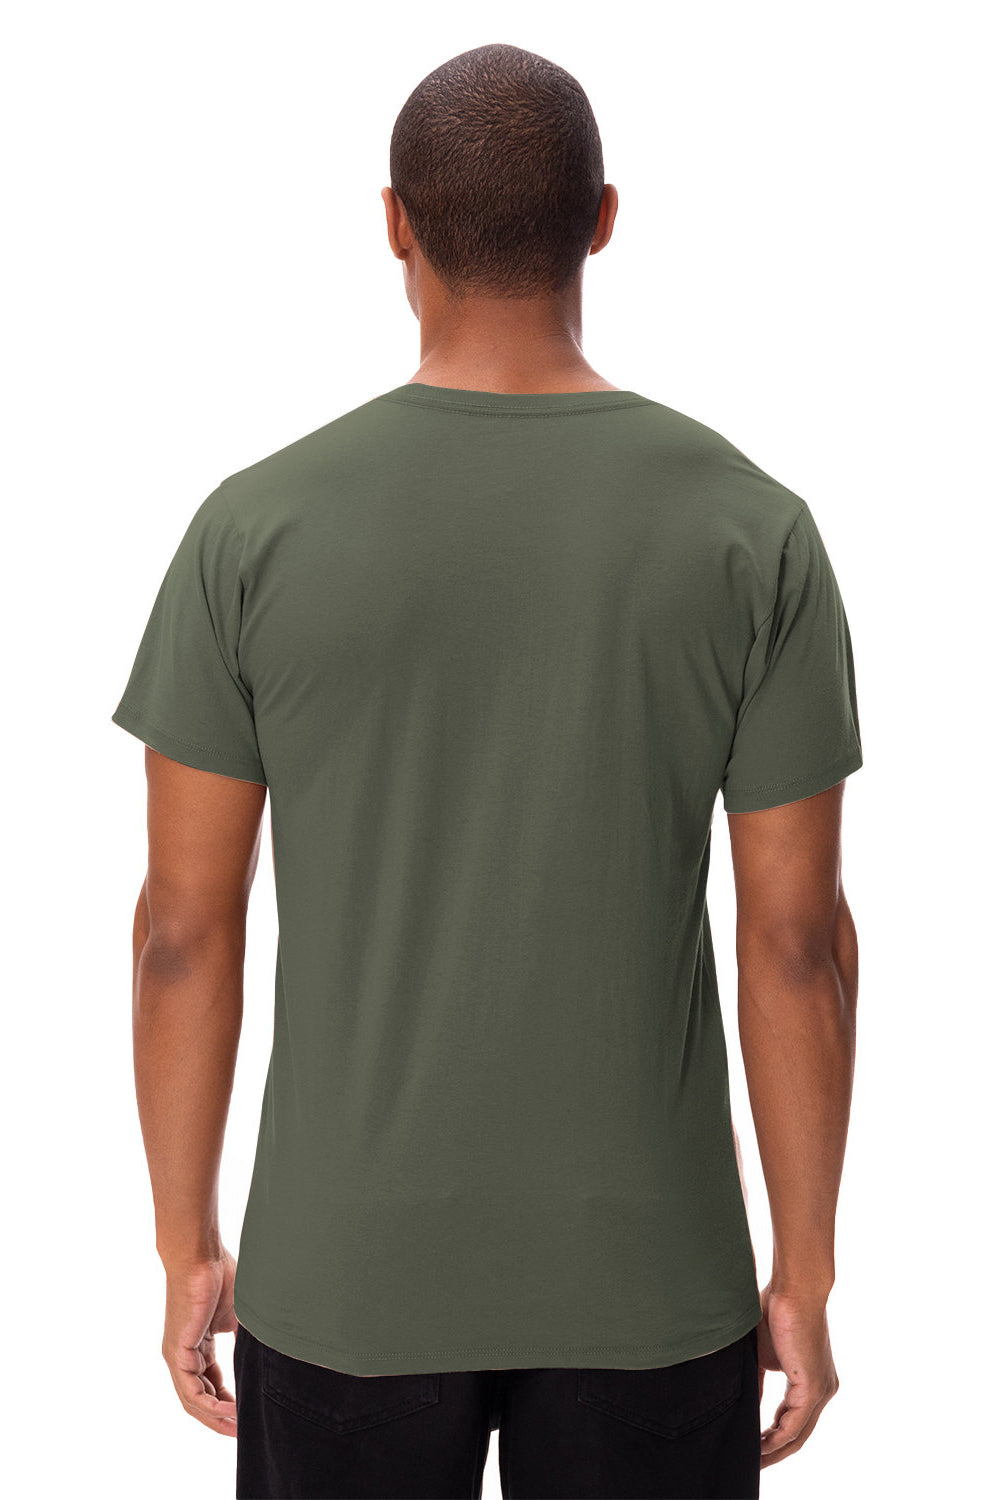 Threadfast Apparel 180A Mens Ultimate Short Sleeve Crewneck T-Shirt Army Green Back